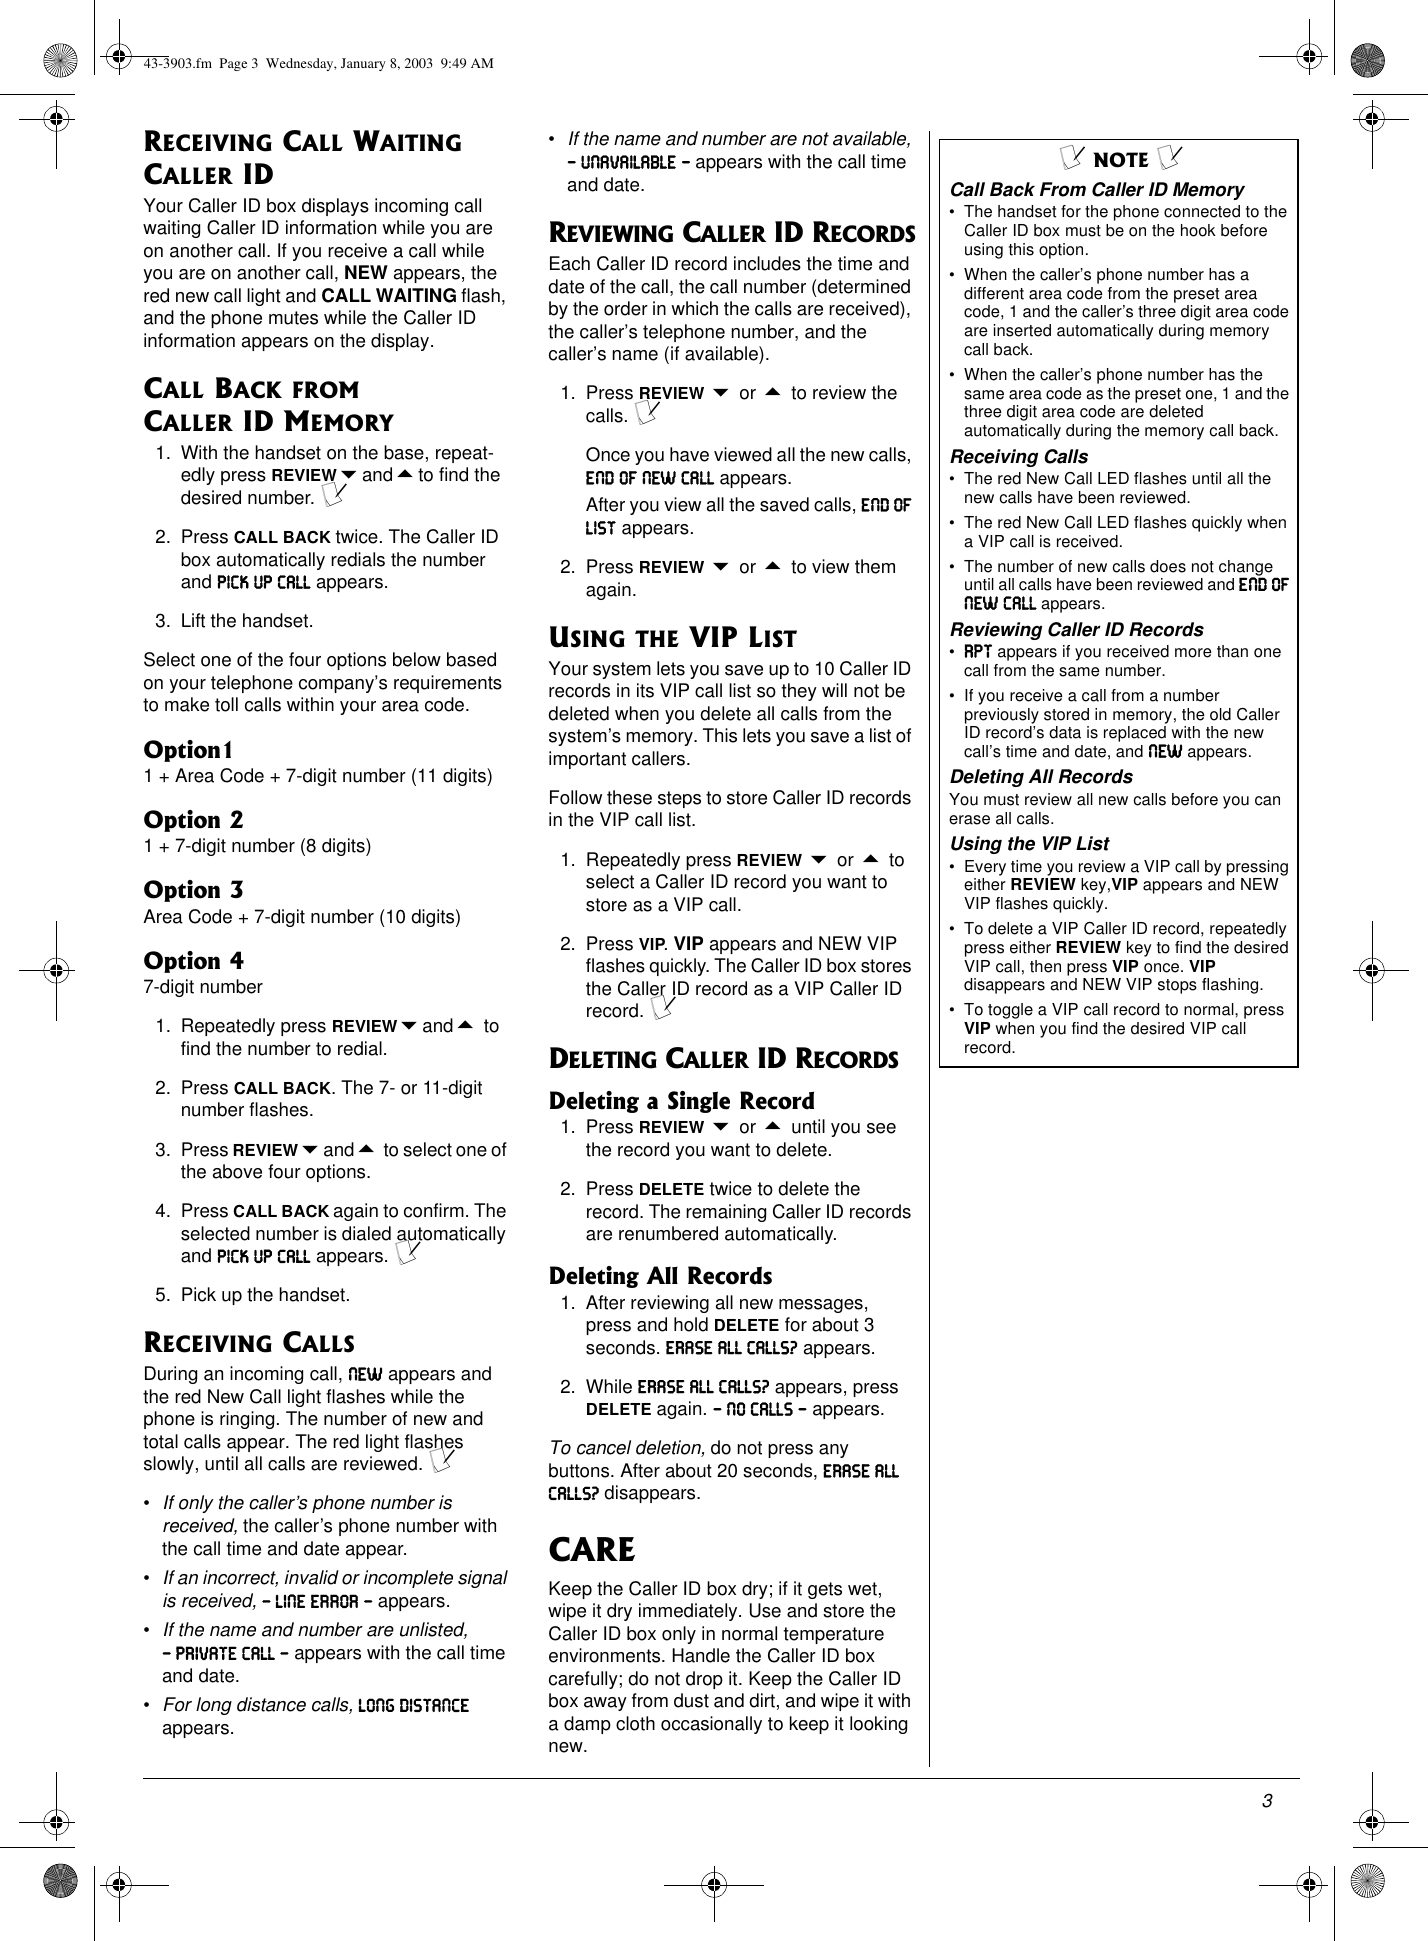 Page 3 of 4 - Radio-Shack Radio-Shack-43-3903-Users-Manual- 43-3903  Radio-shack-43-3903-users-manual